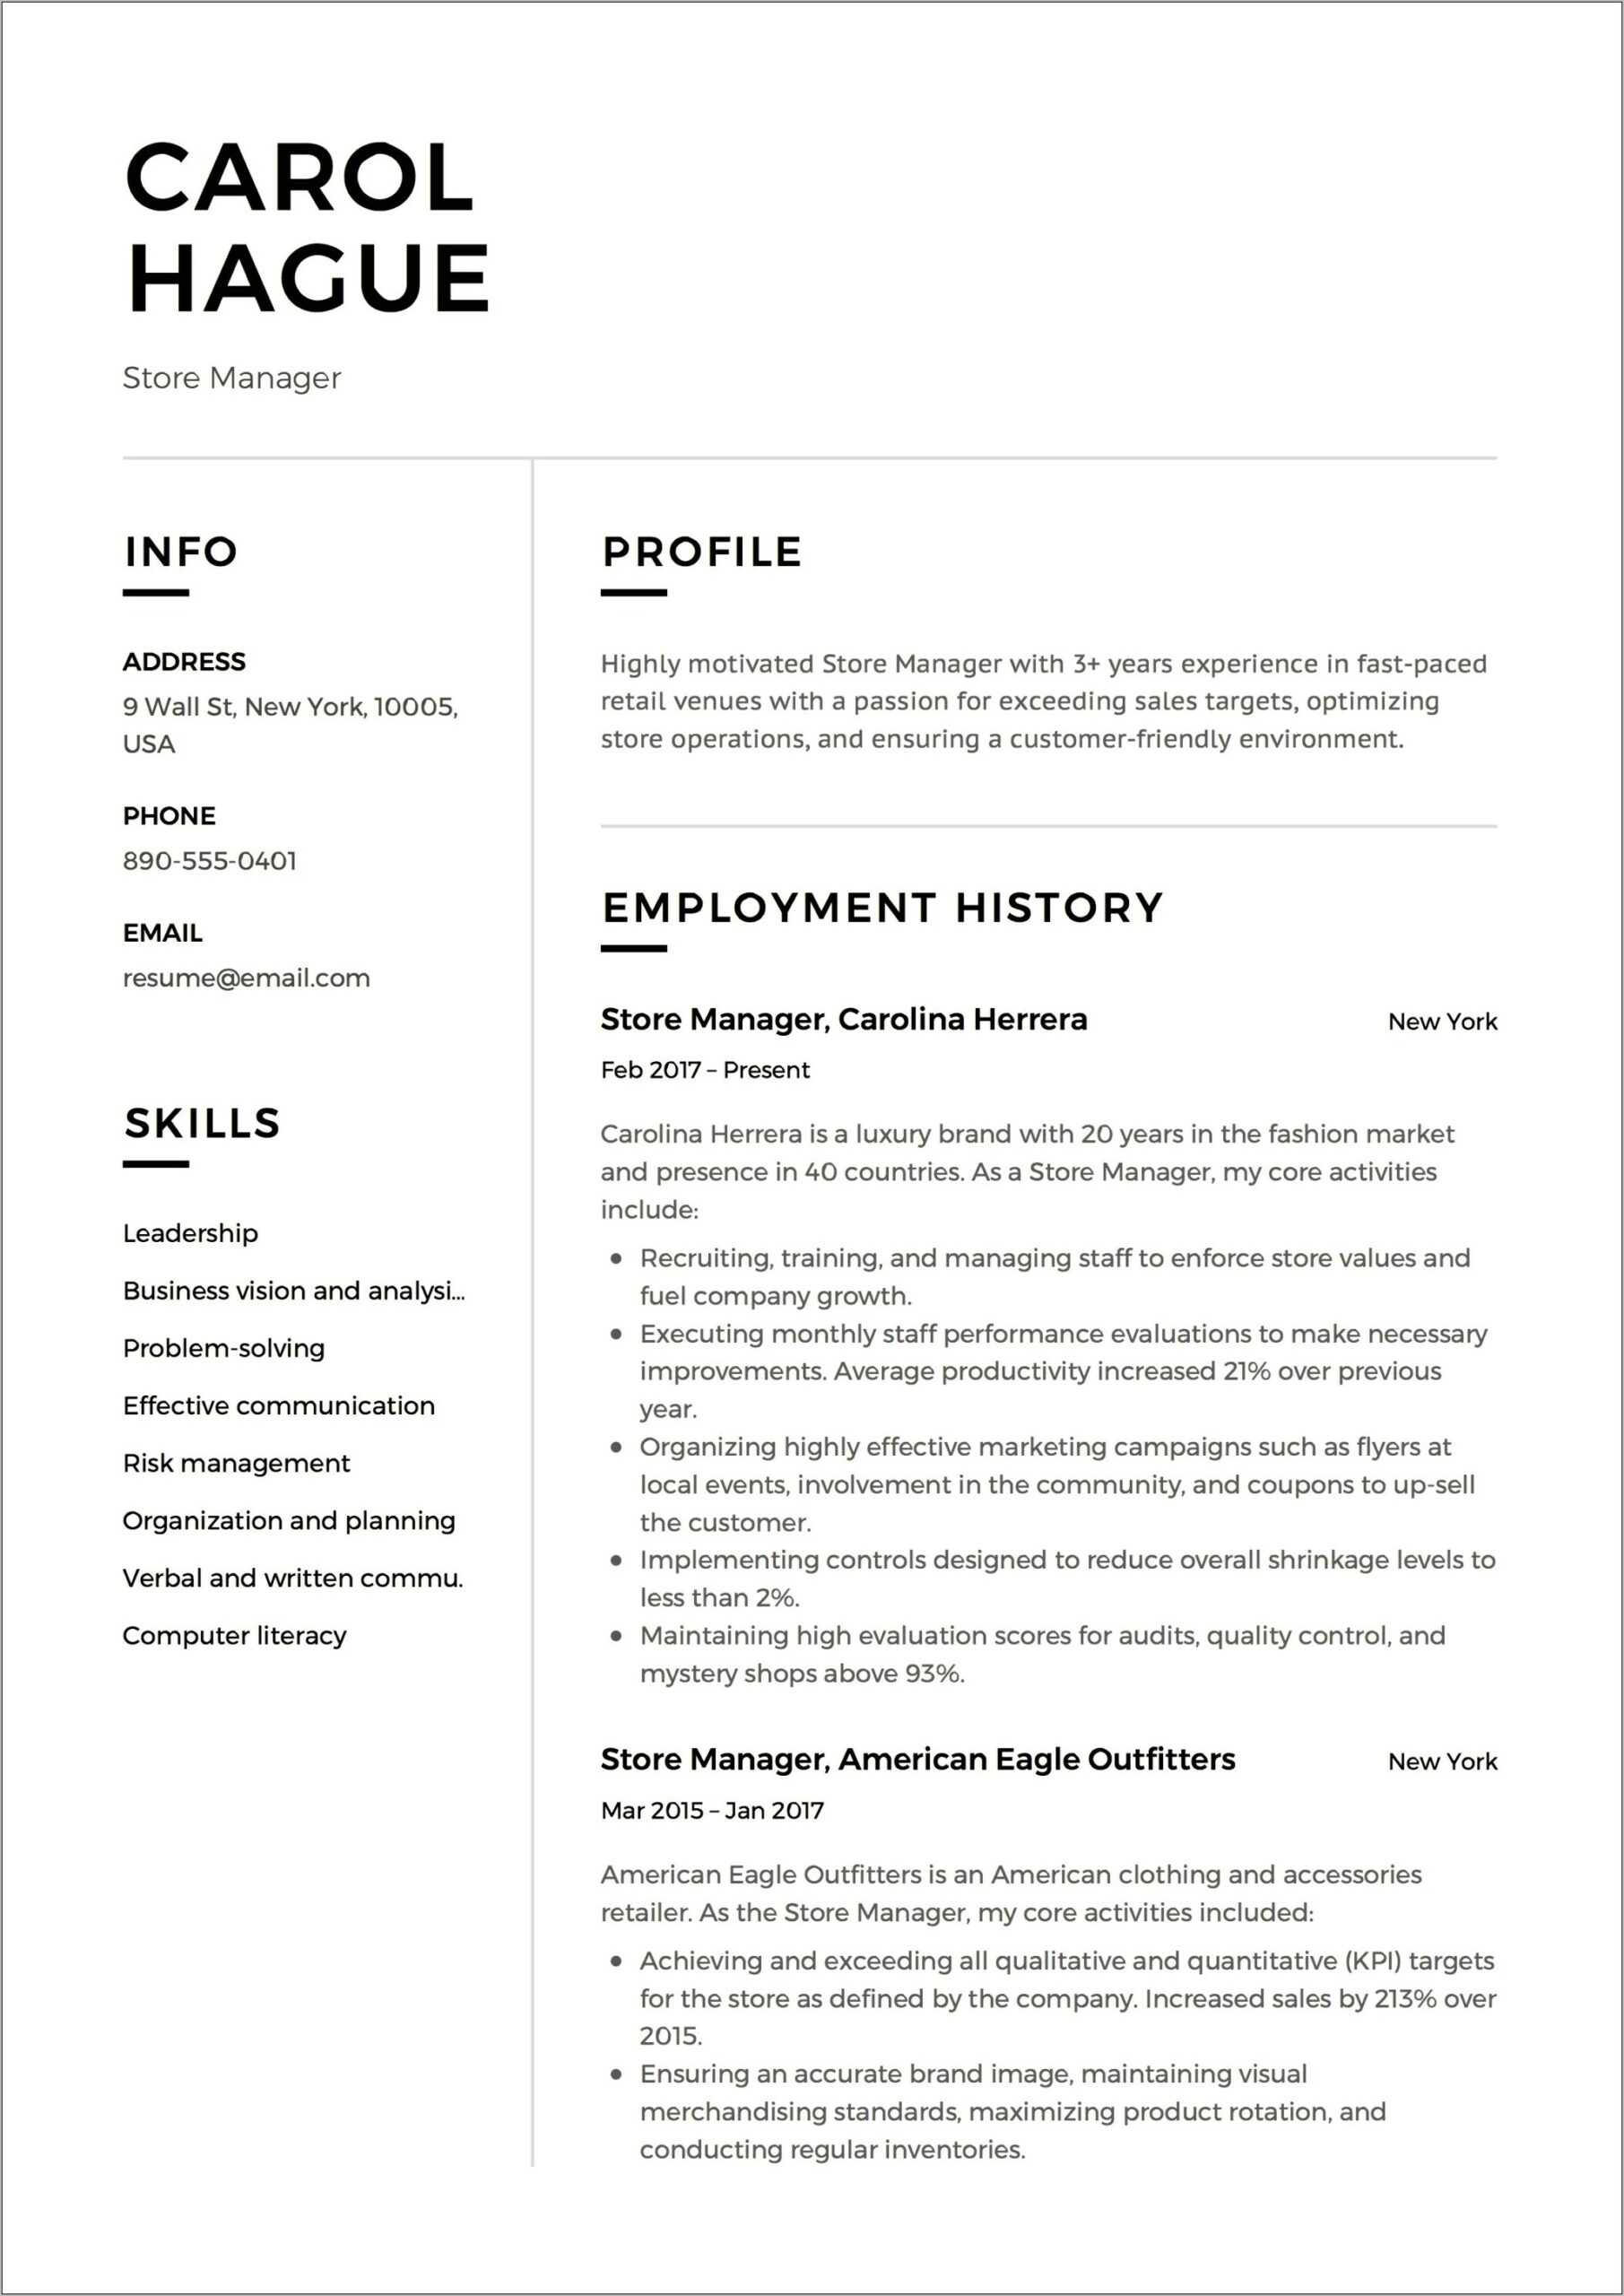 Apparel Merchandising Manager Job Description For Resume